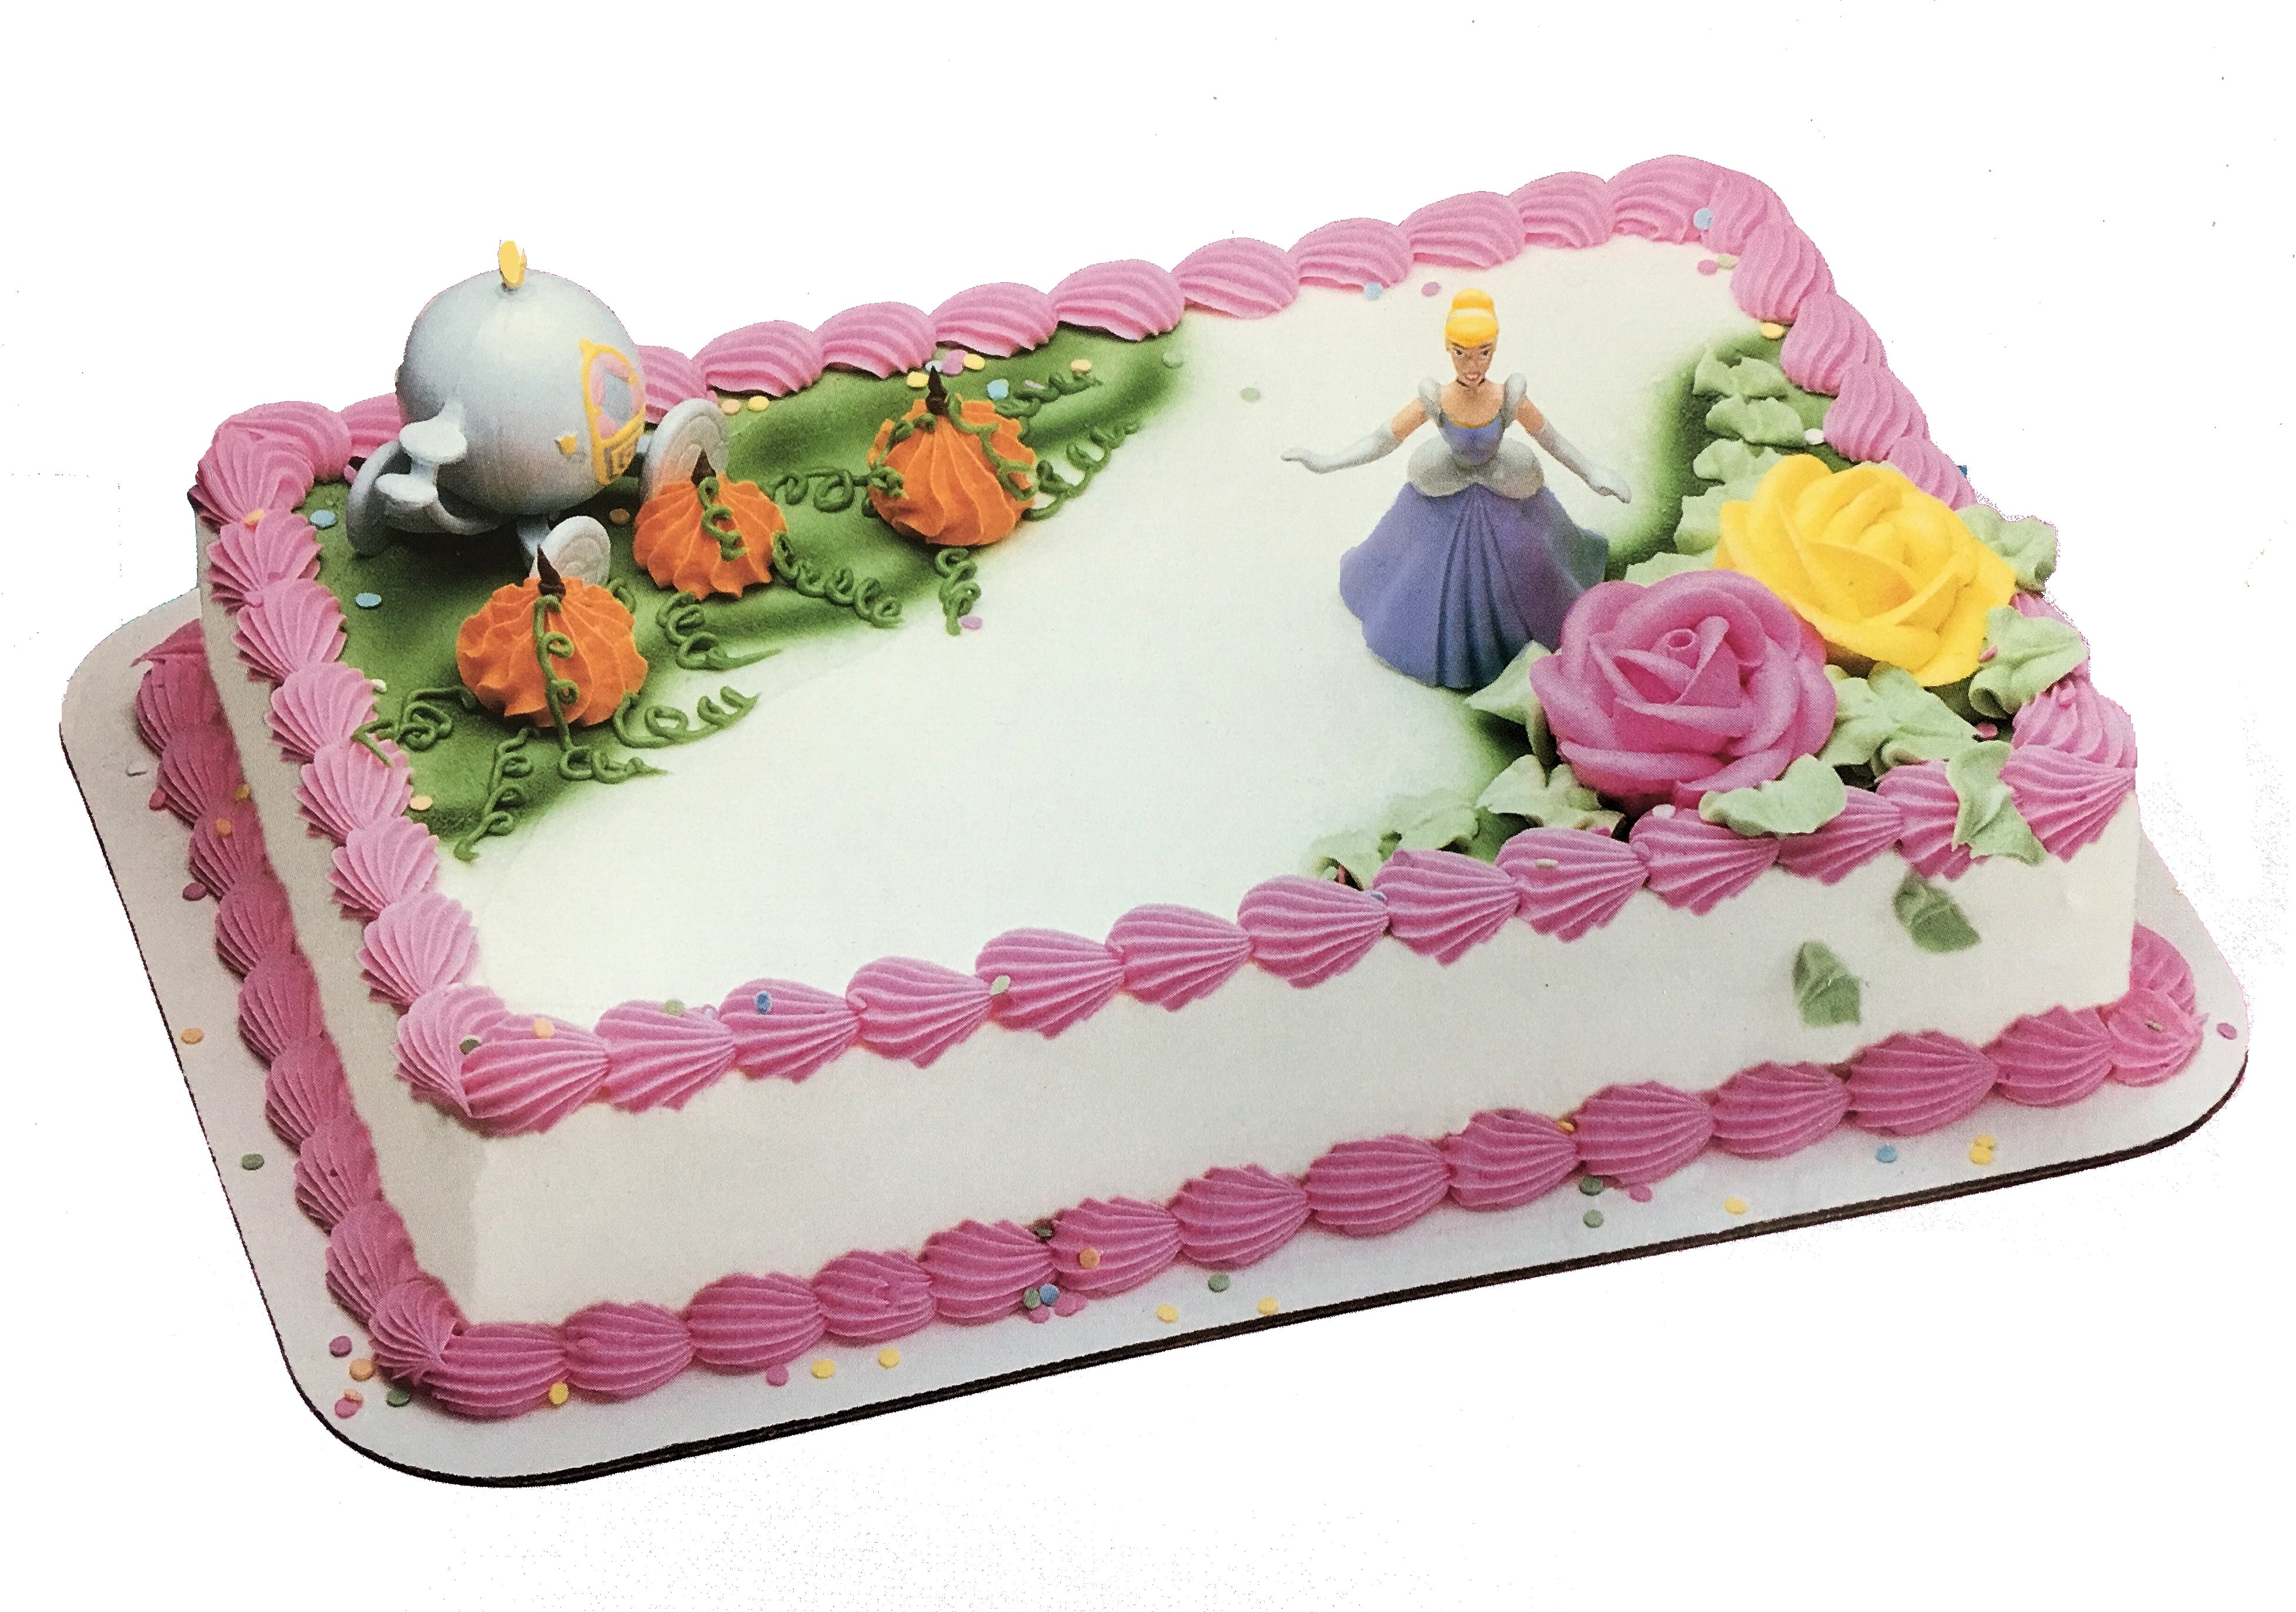 Princess Birthday Cake, Food & Drinks, Homemade Bakes on Carousell